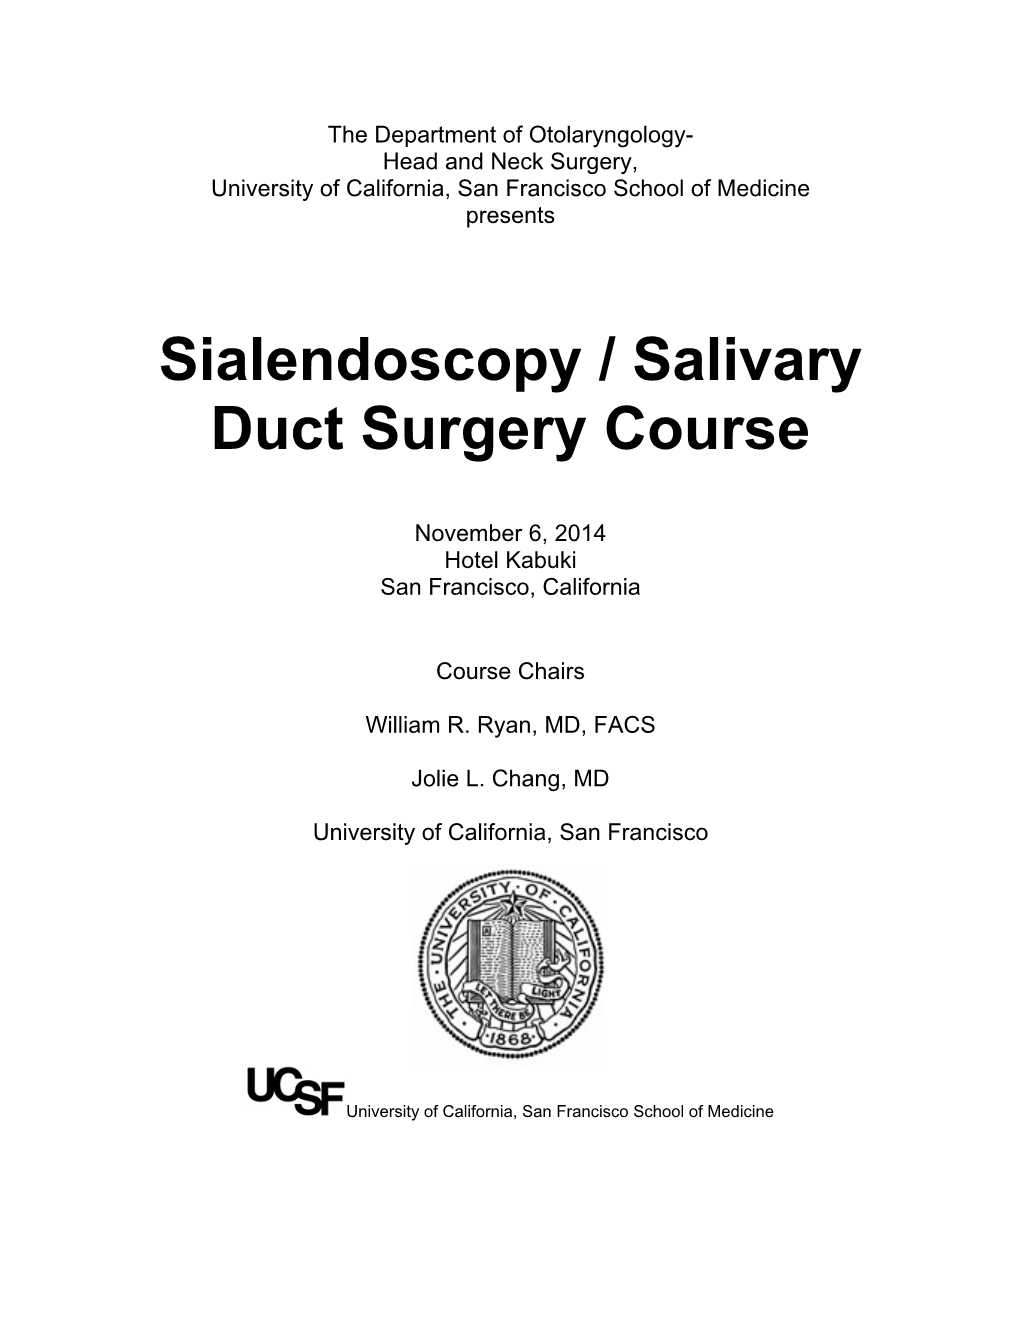 Sialendoscopy / Salivary Duct Surgery Course DocsLib